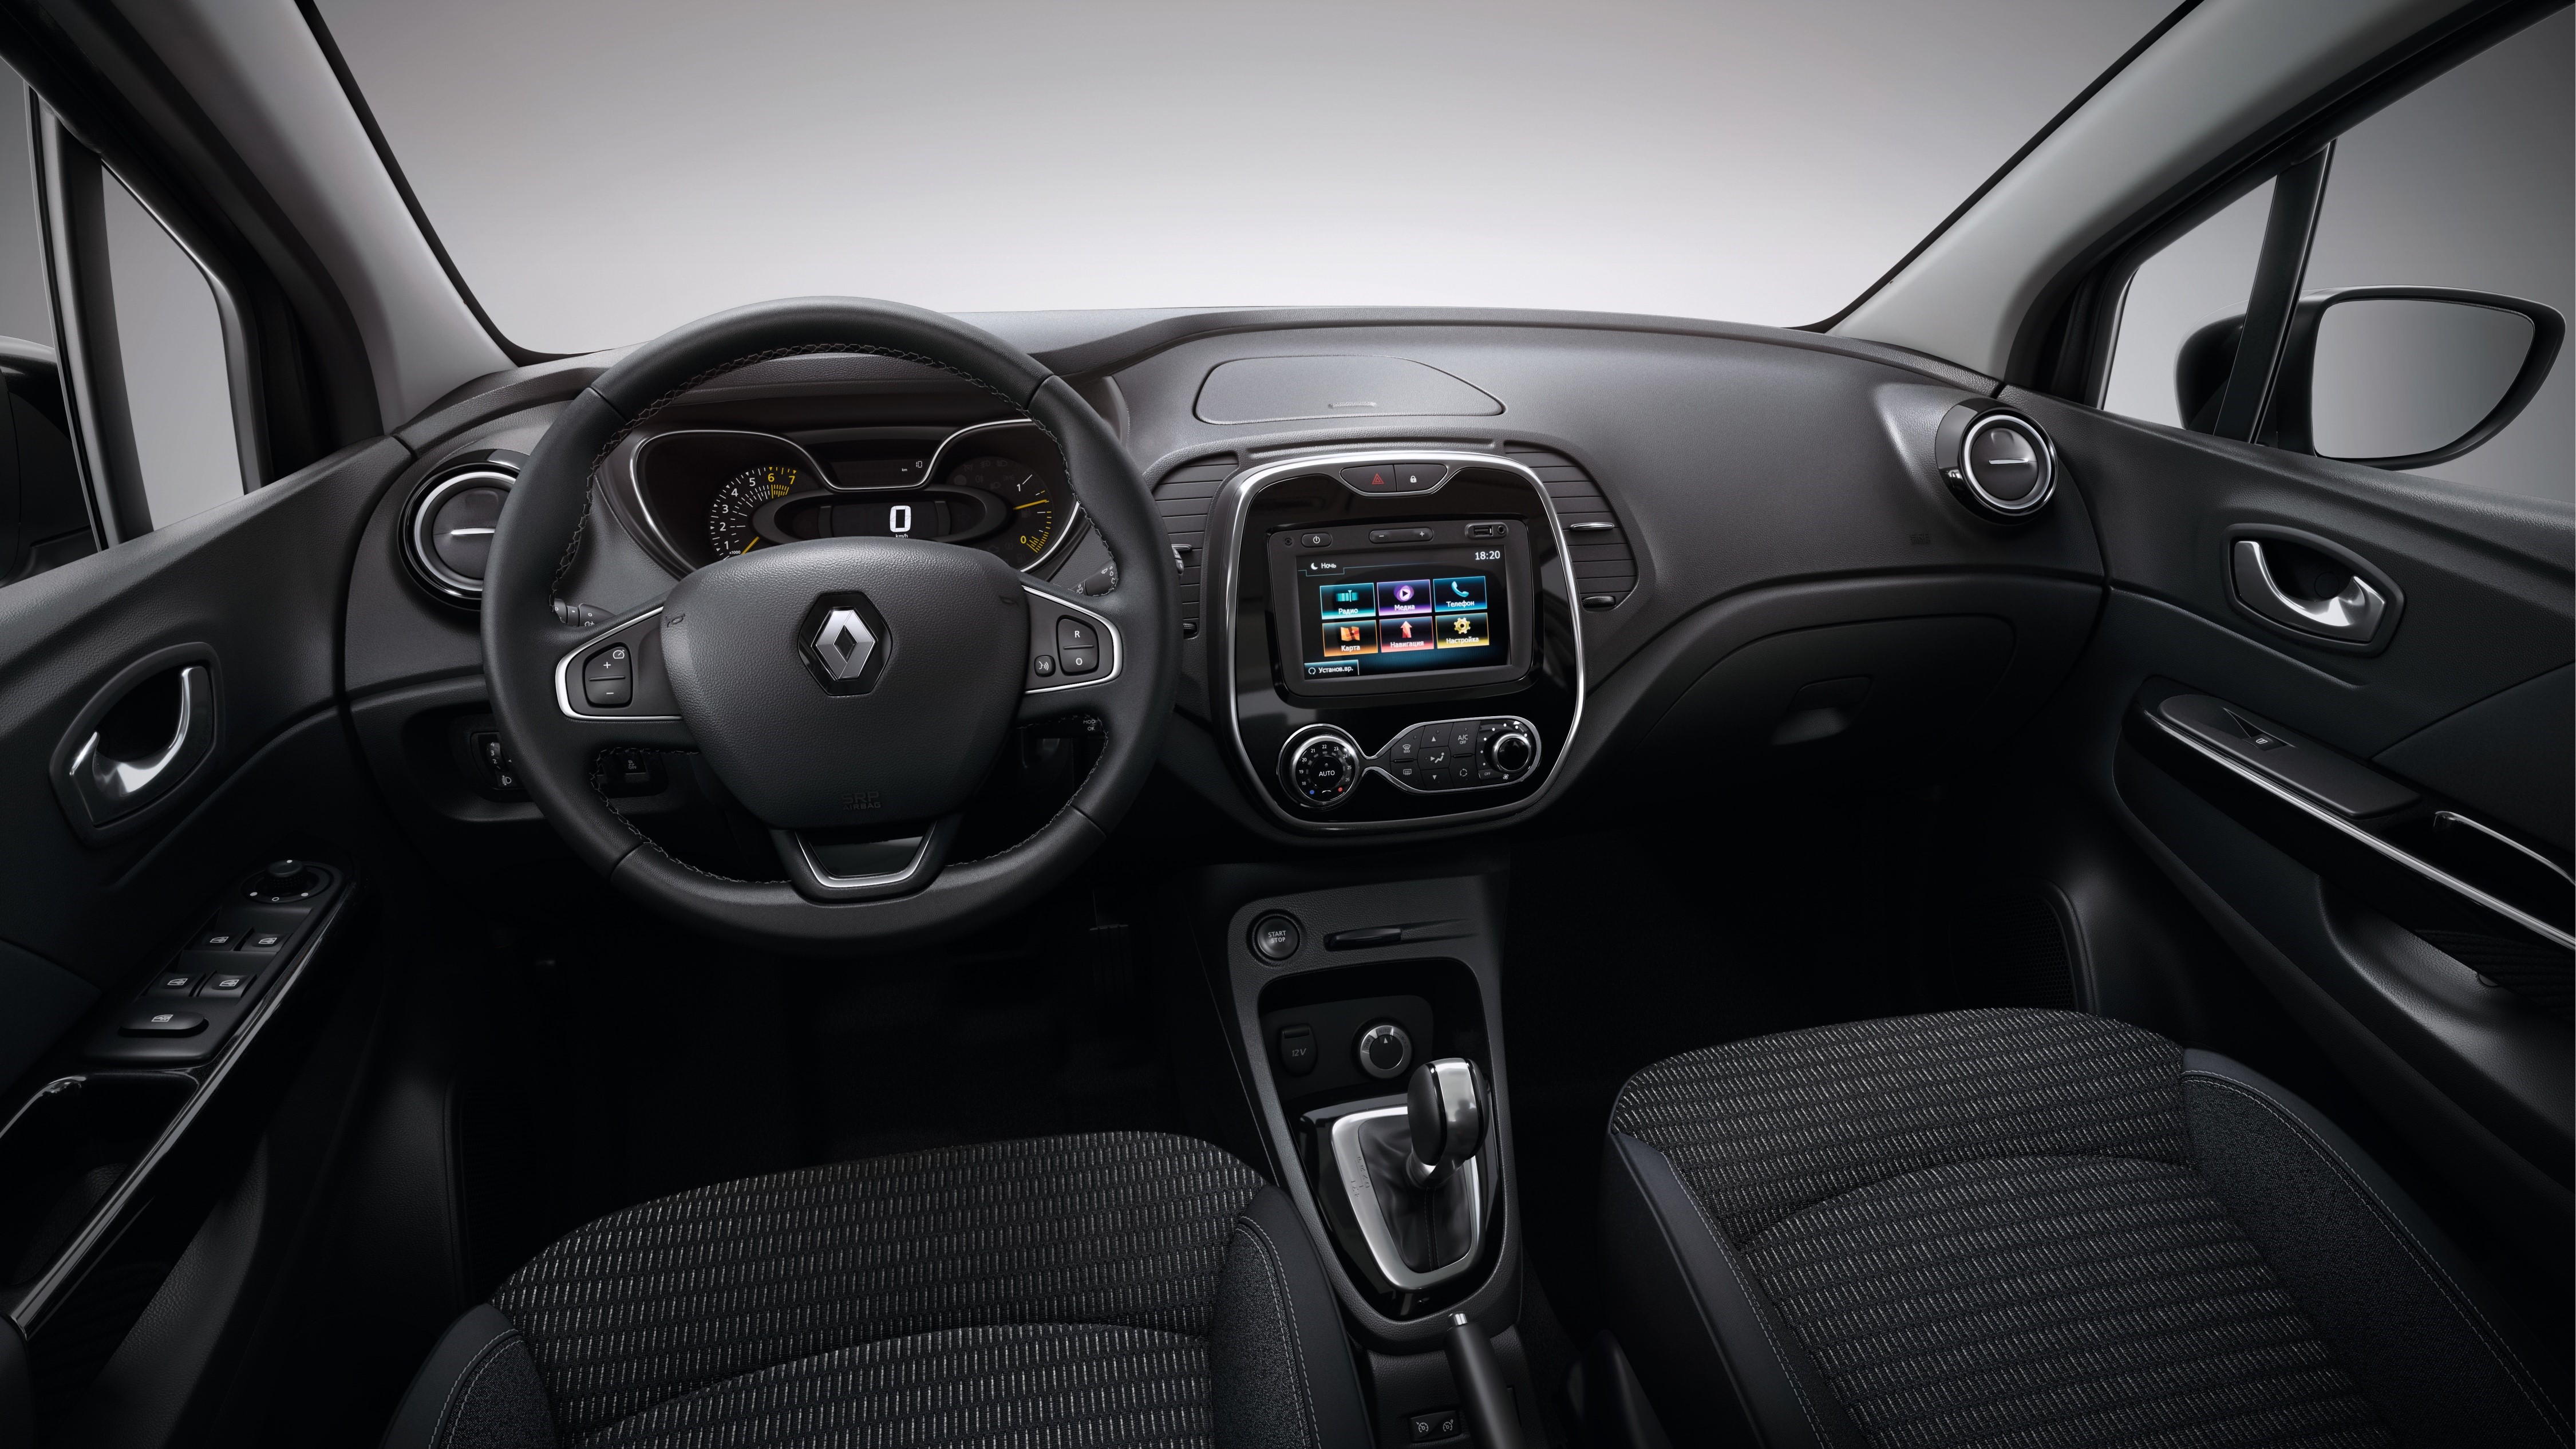 Renault Kaptur images (2)